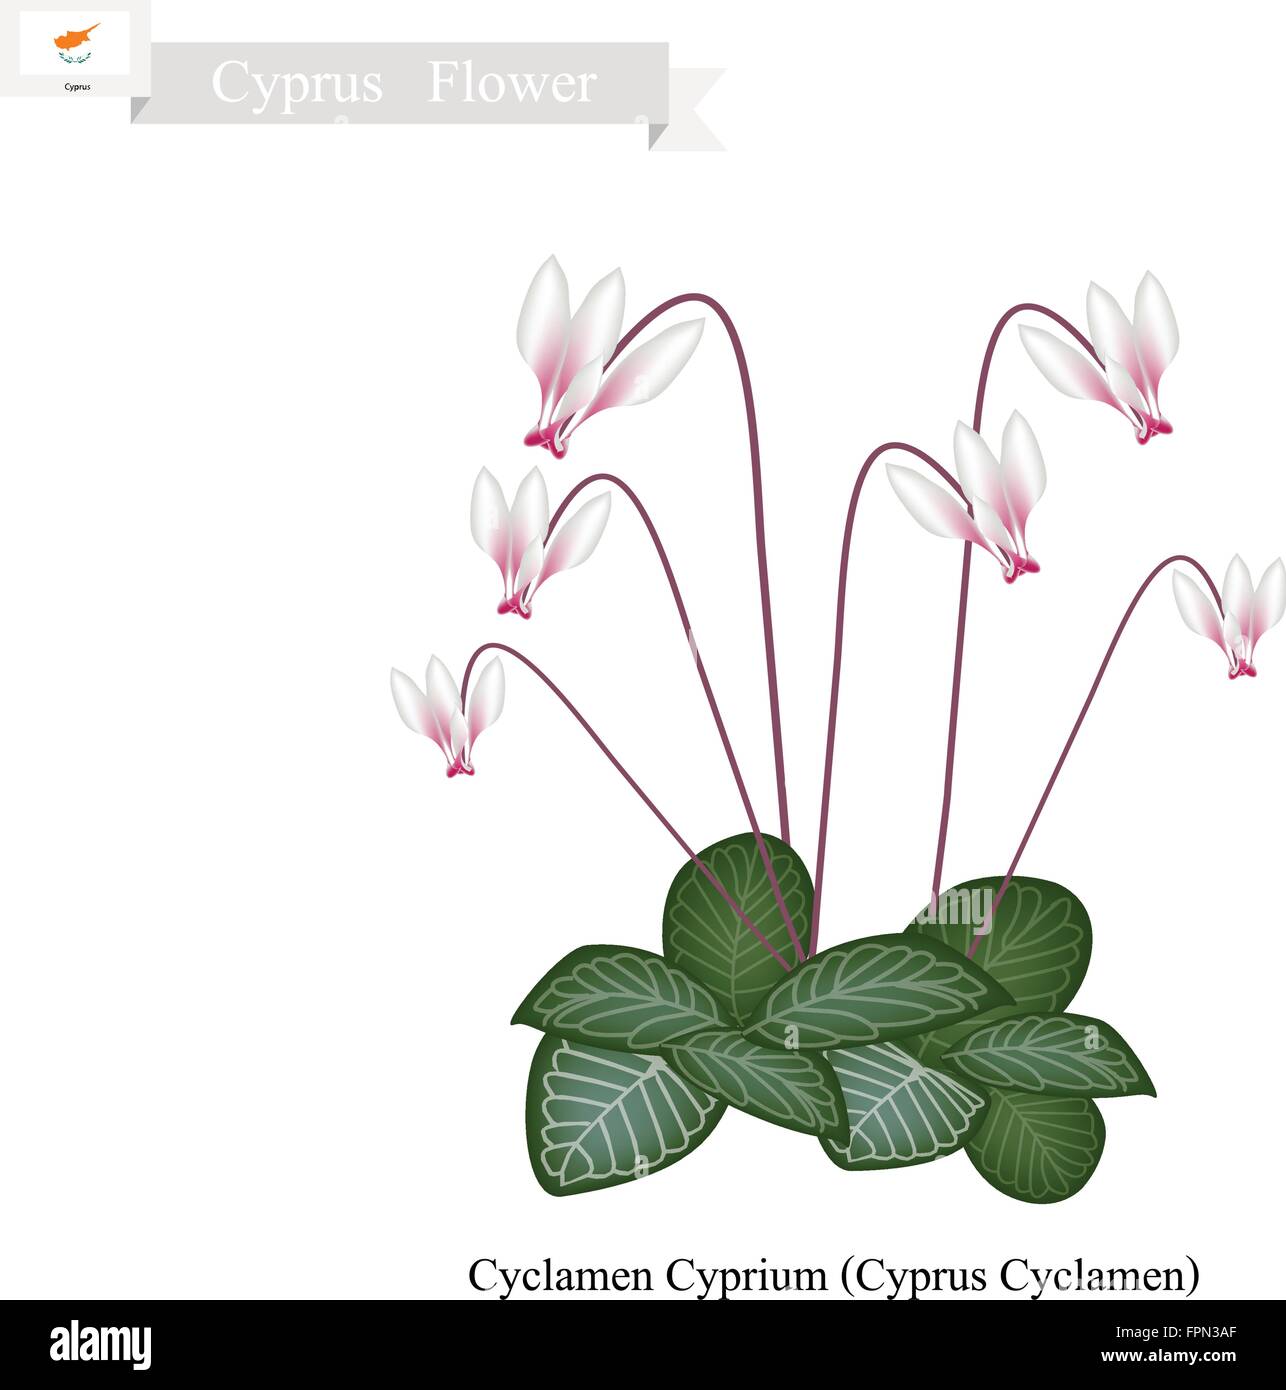 Cyprus Flower, Illustration of Cyclamen Cyprium Flowers or Cyprus Cyclamen Flowers. One of The Most Popular Flower in Cyprus. Stock Vector